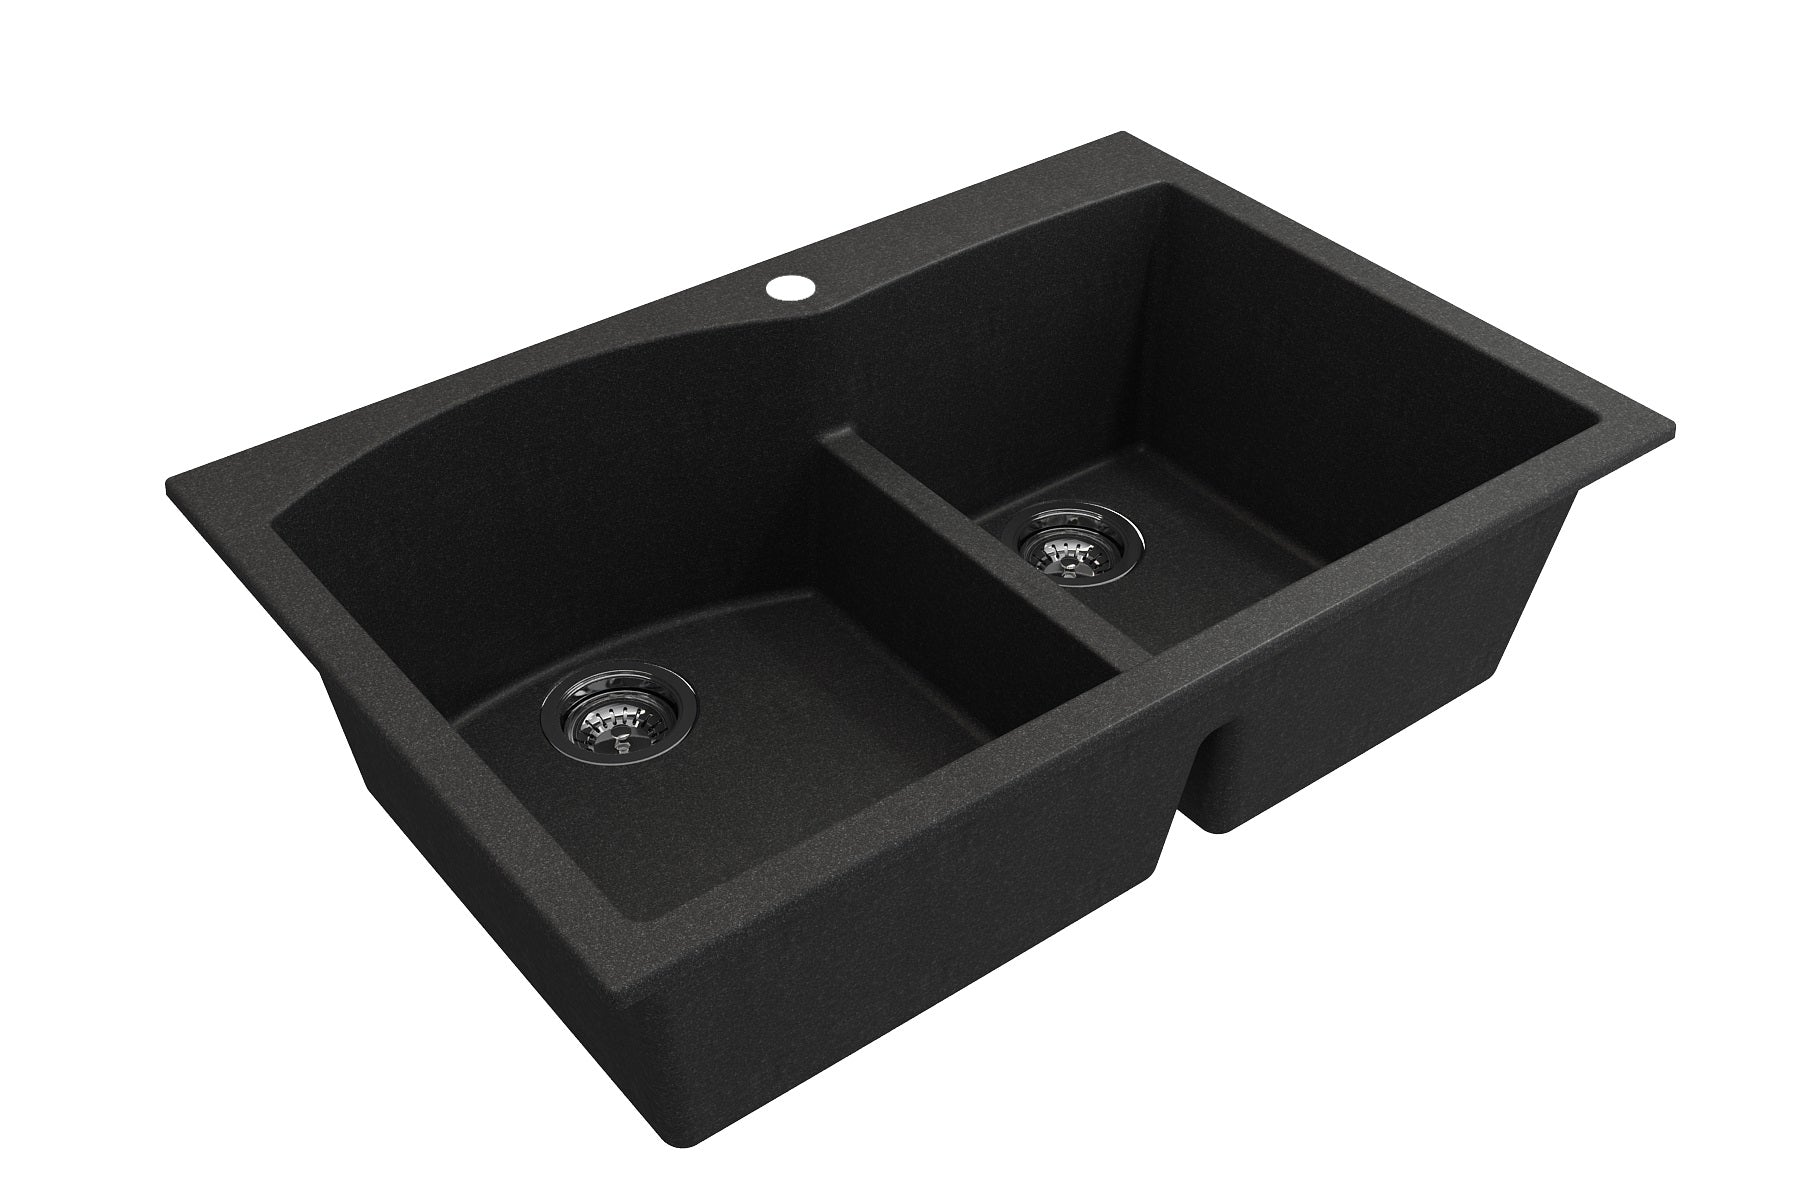 Bocchi 33" Dual Mount Granite Composite 60/40 Double Bowl Sink in Metallic Black